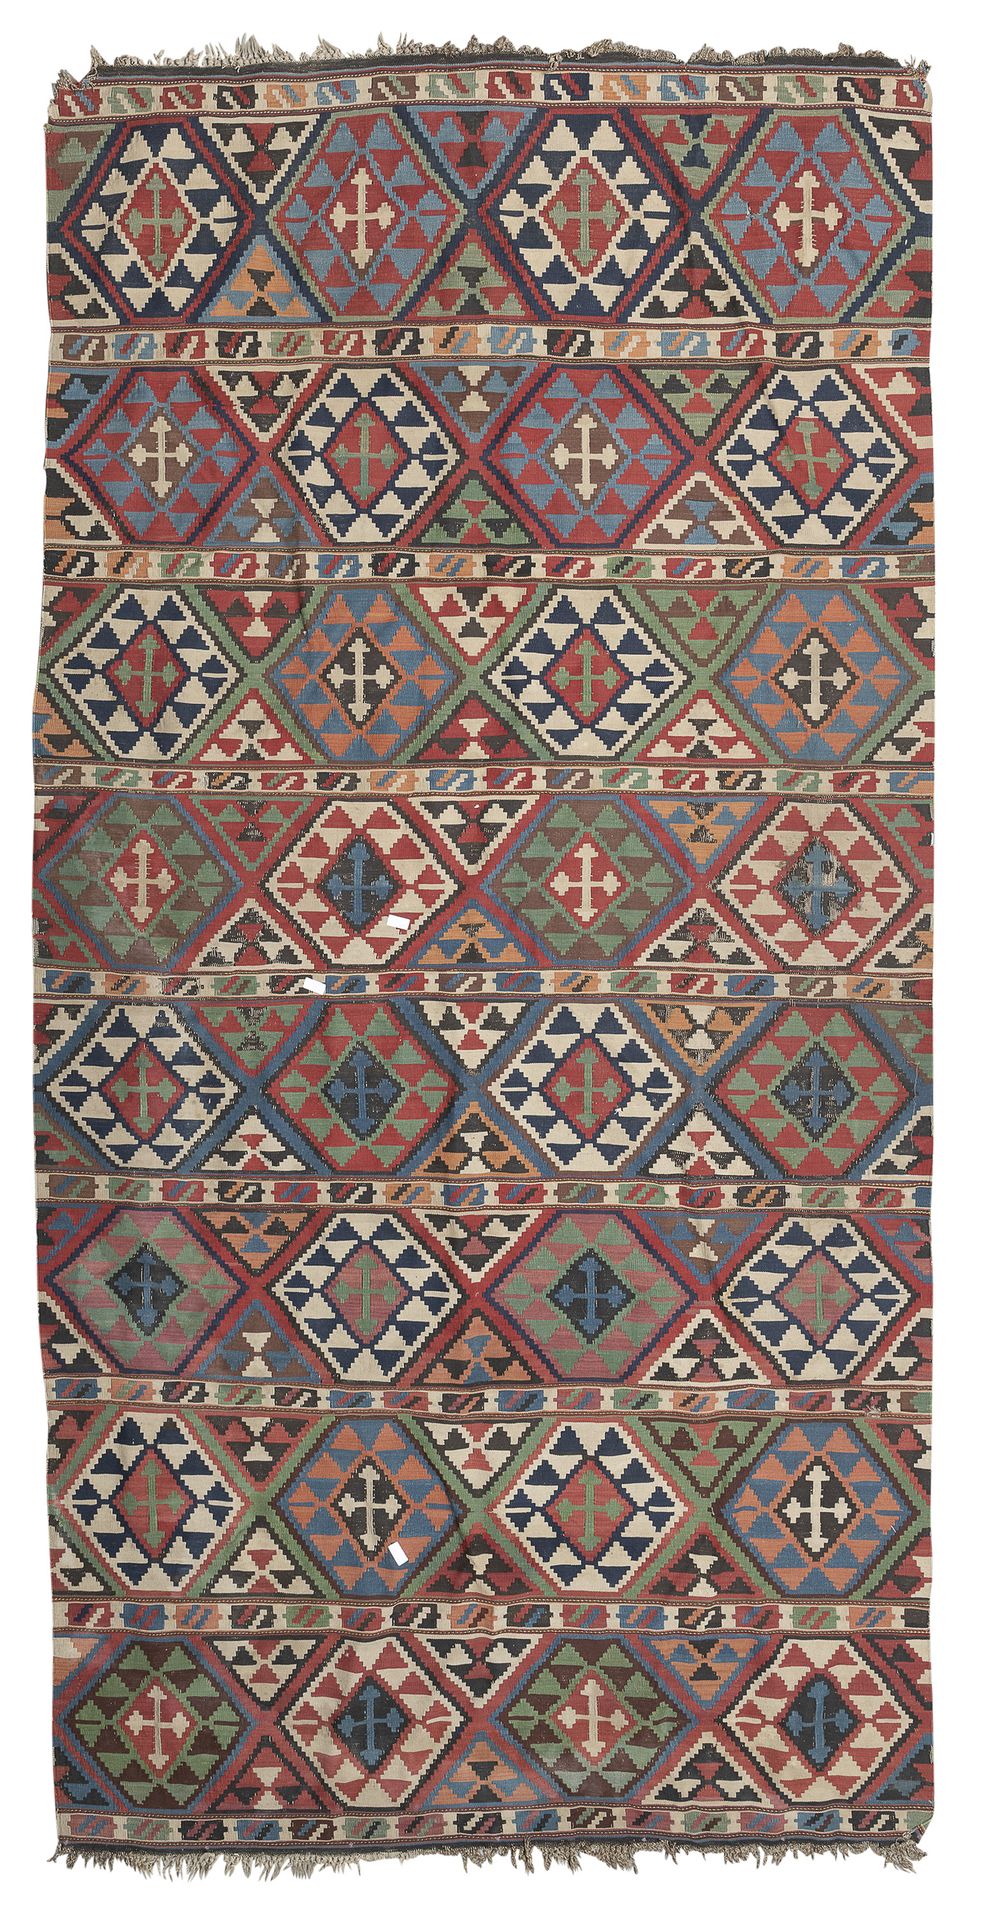 Null 基里姆地毯，安纳托利亚，20世纪初

带有多色的六角形设计，中心是一个十字架。

尺寸为290 x 155厘米。